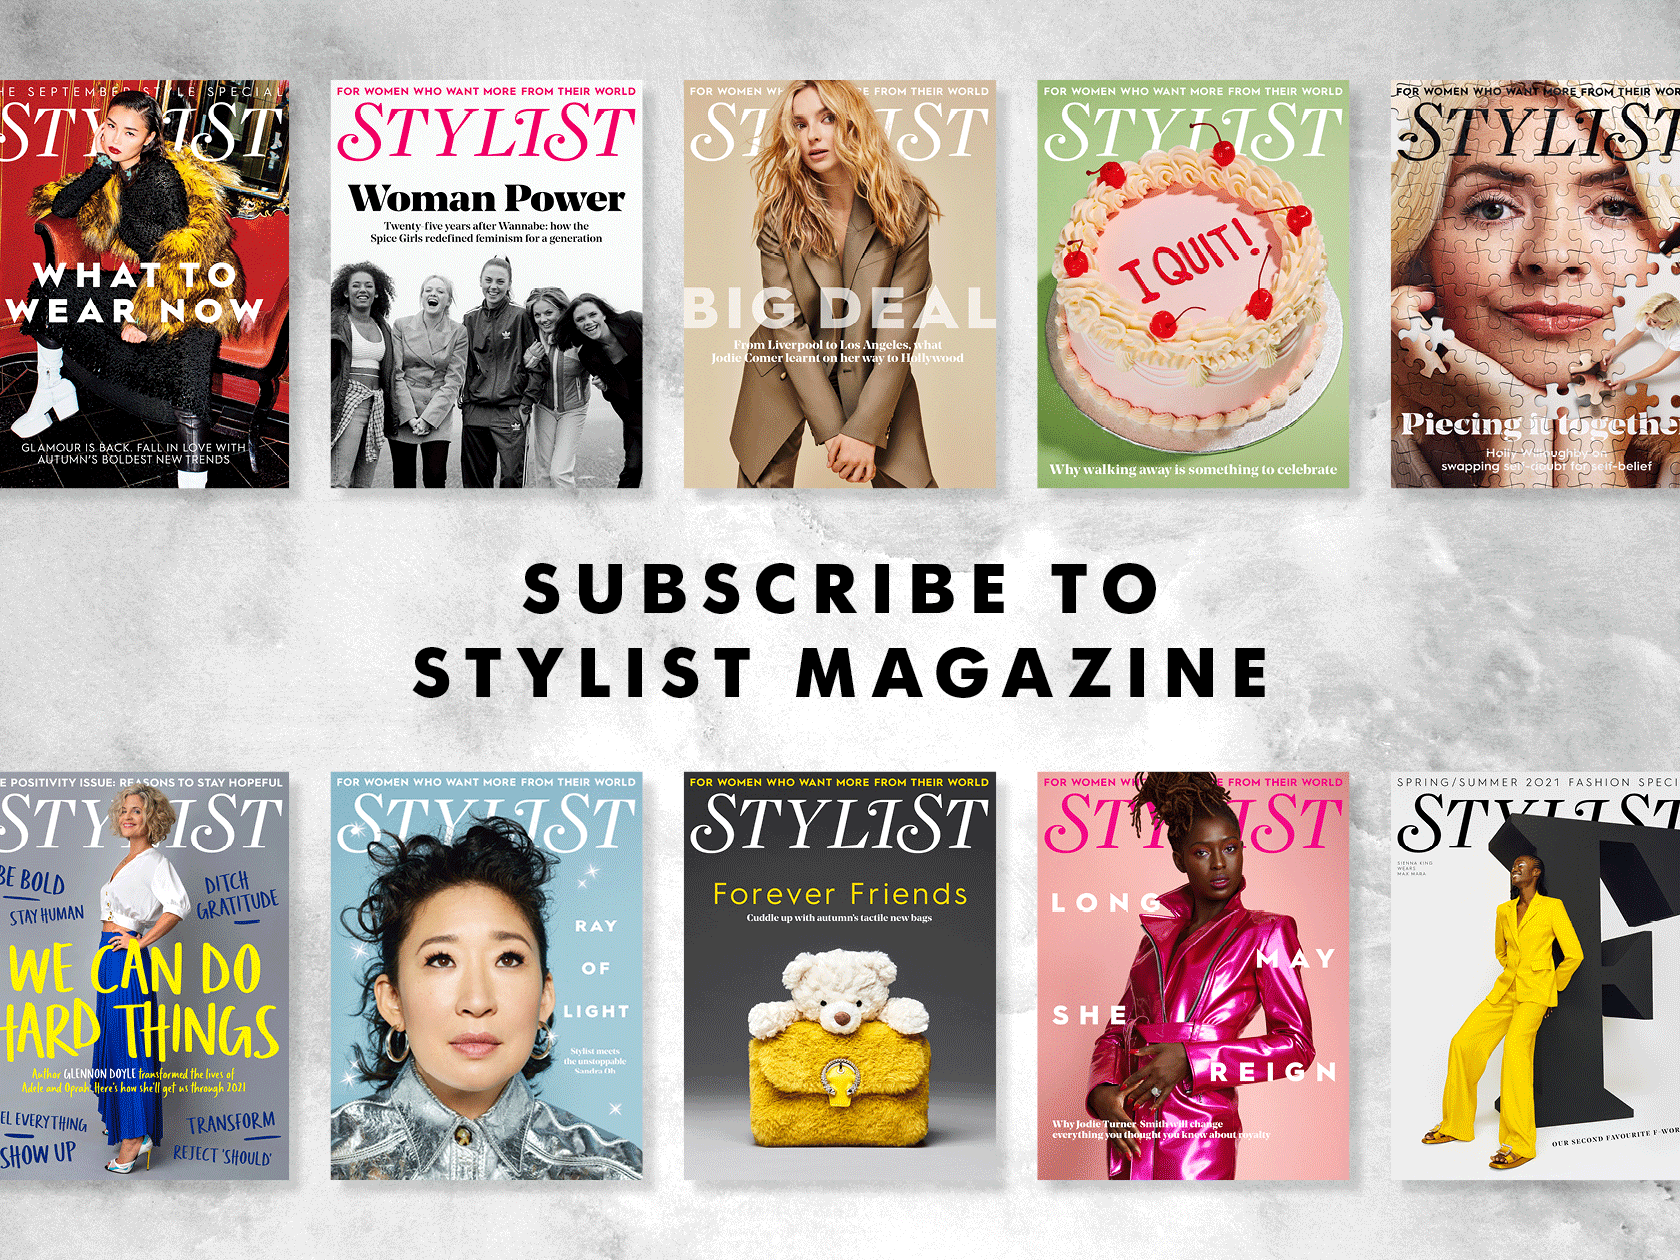 Stylist Magazine covers